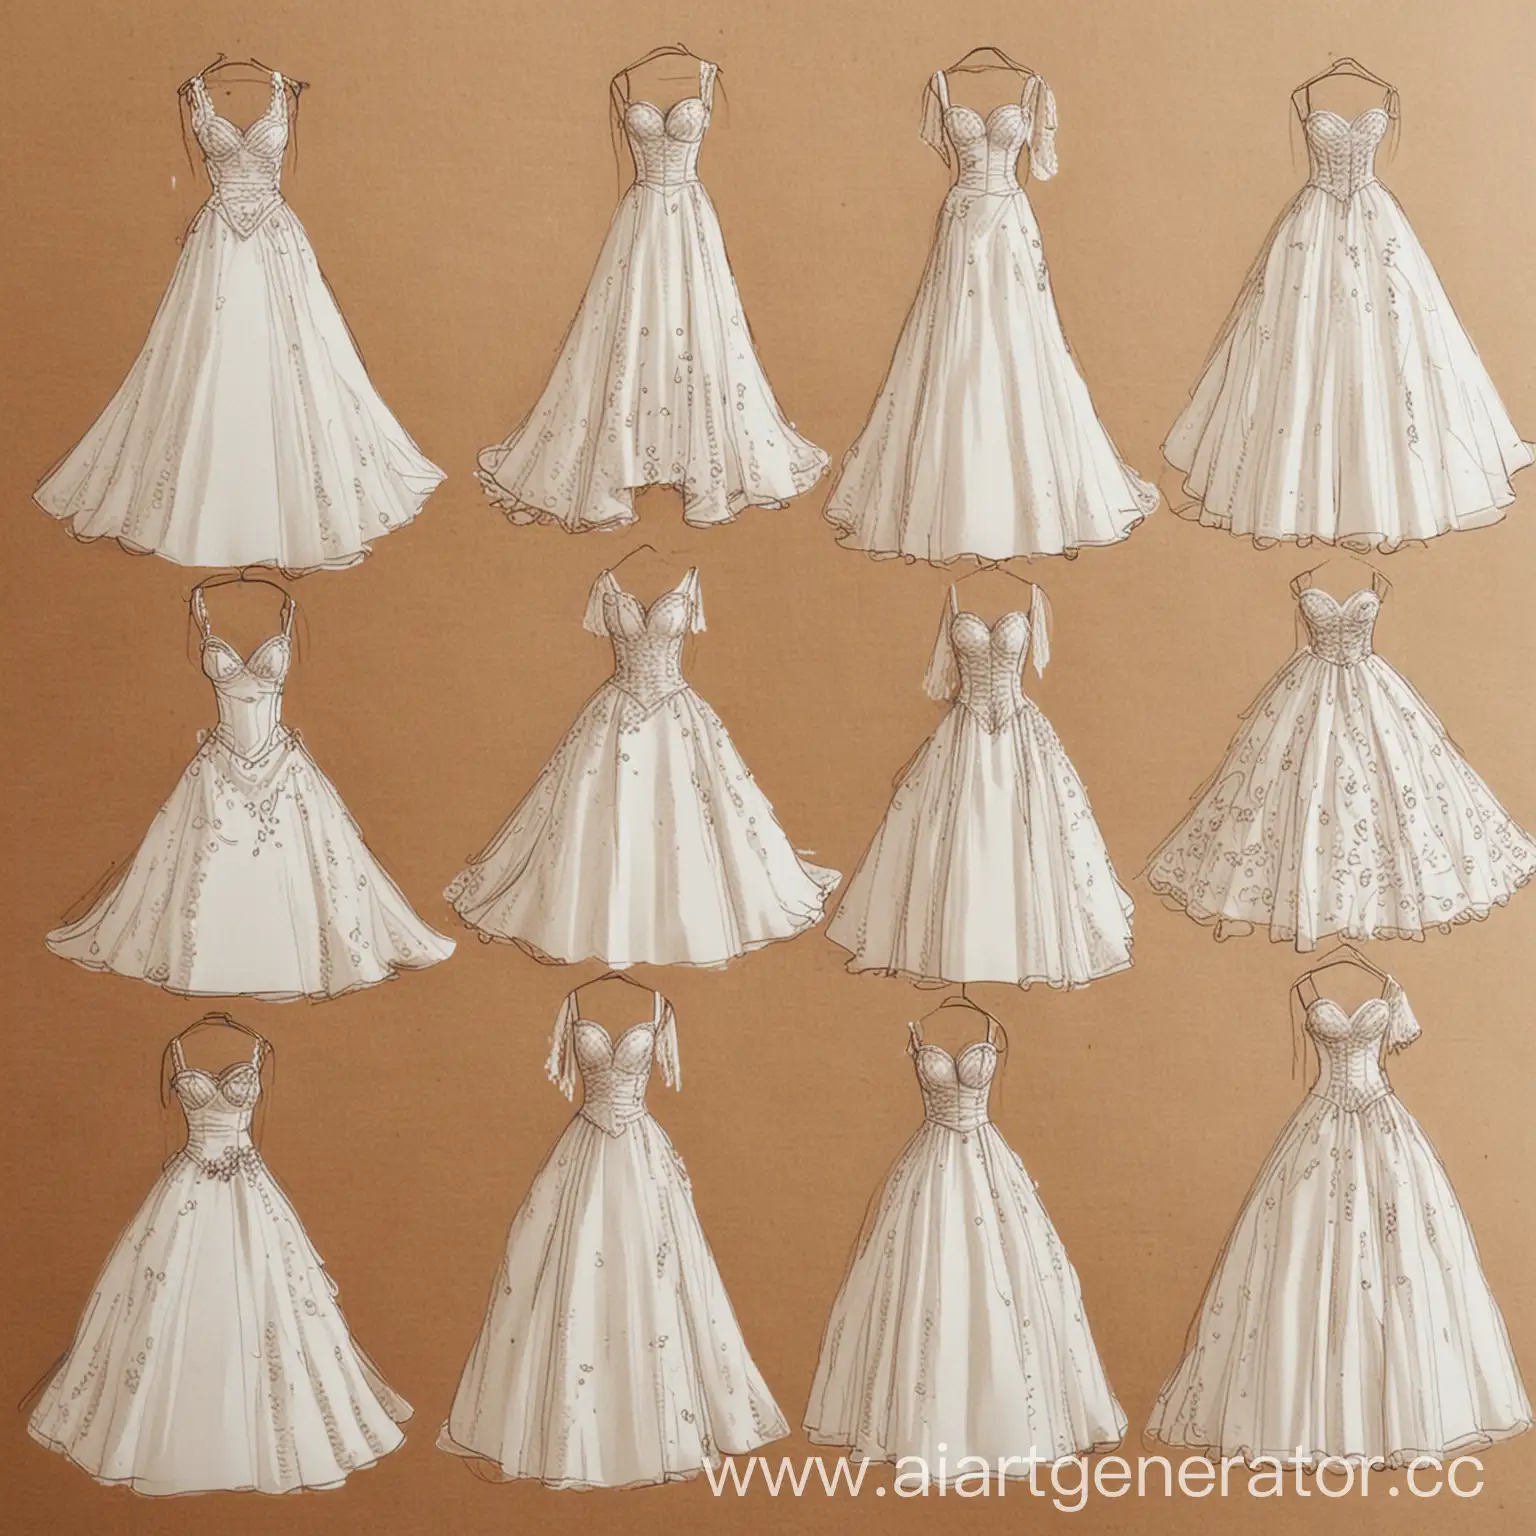 Six-Sketches-of-Elegant-Wedding-Dresses-for-BridestoBe